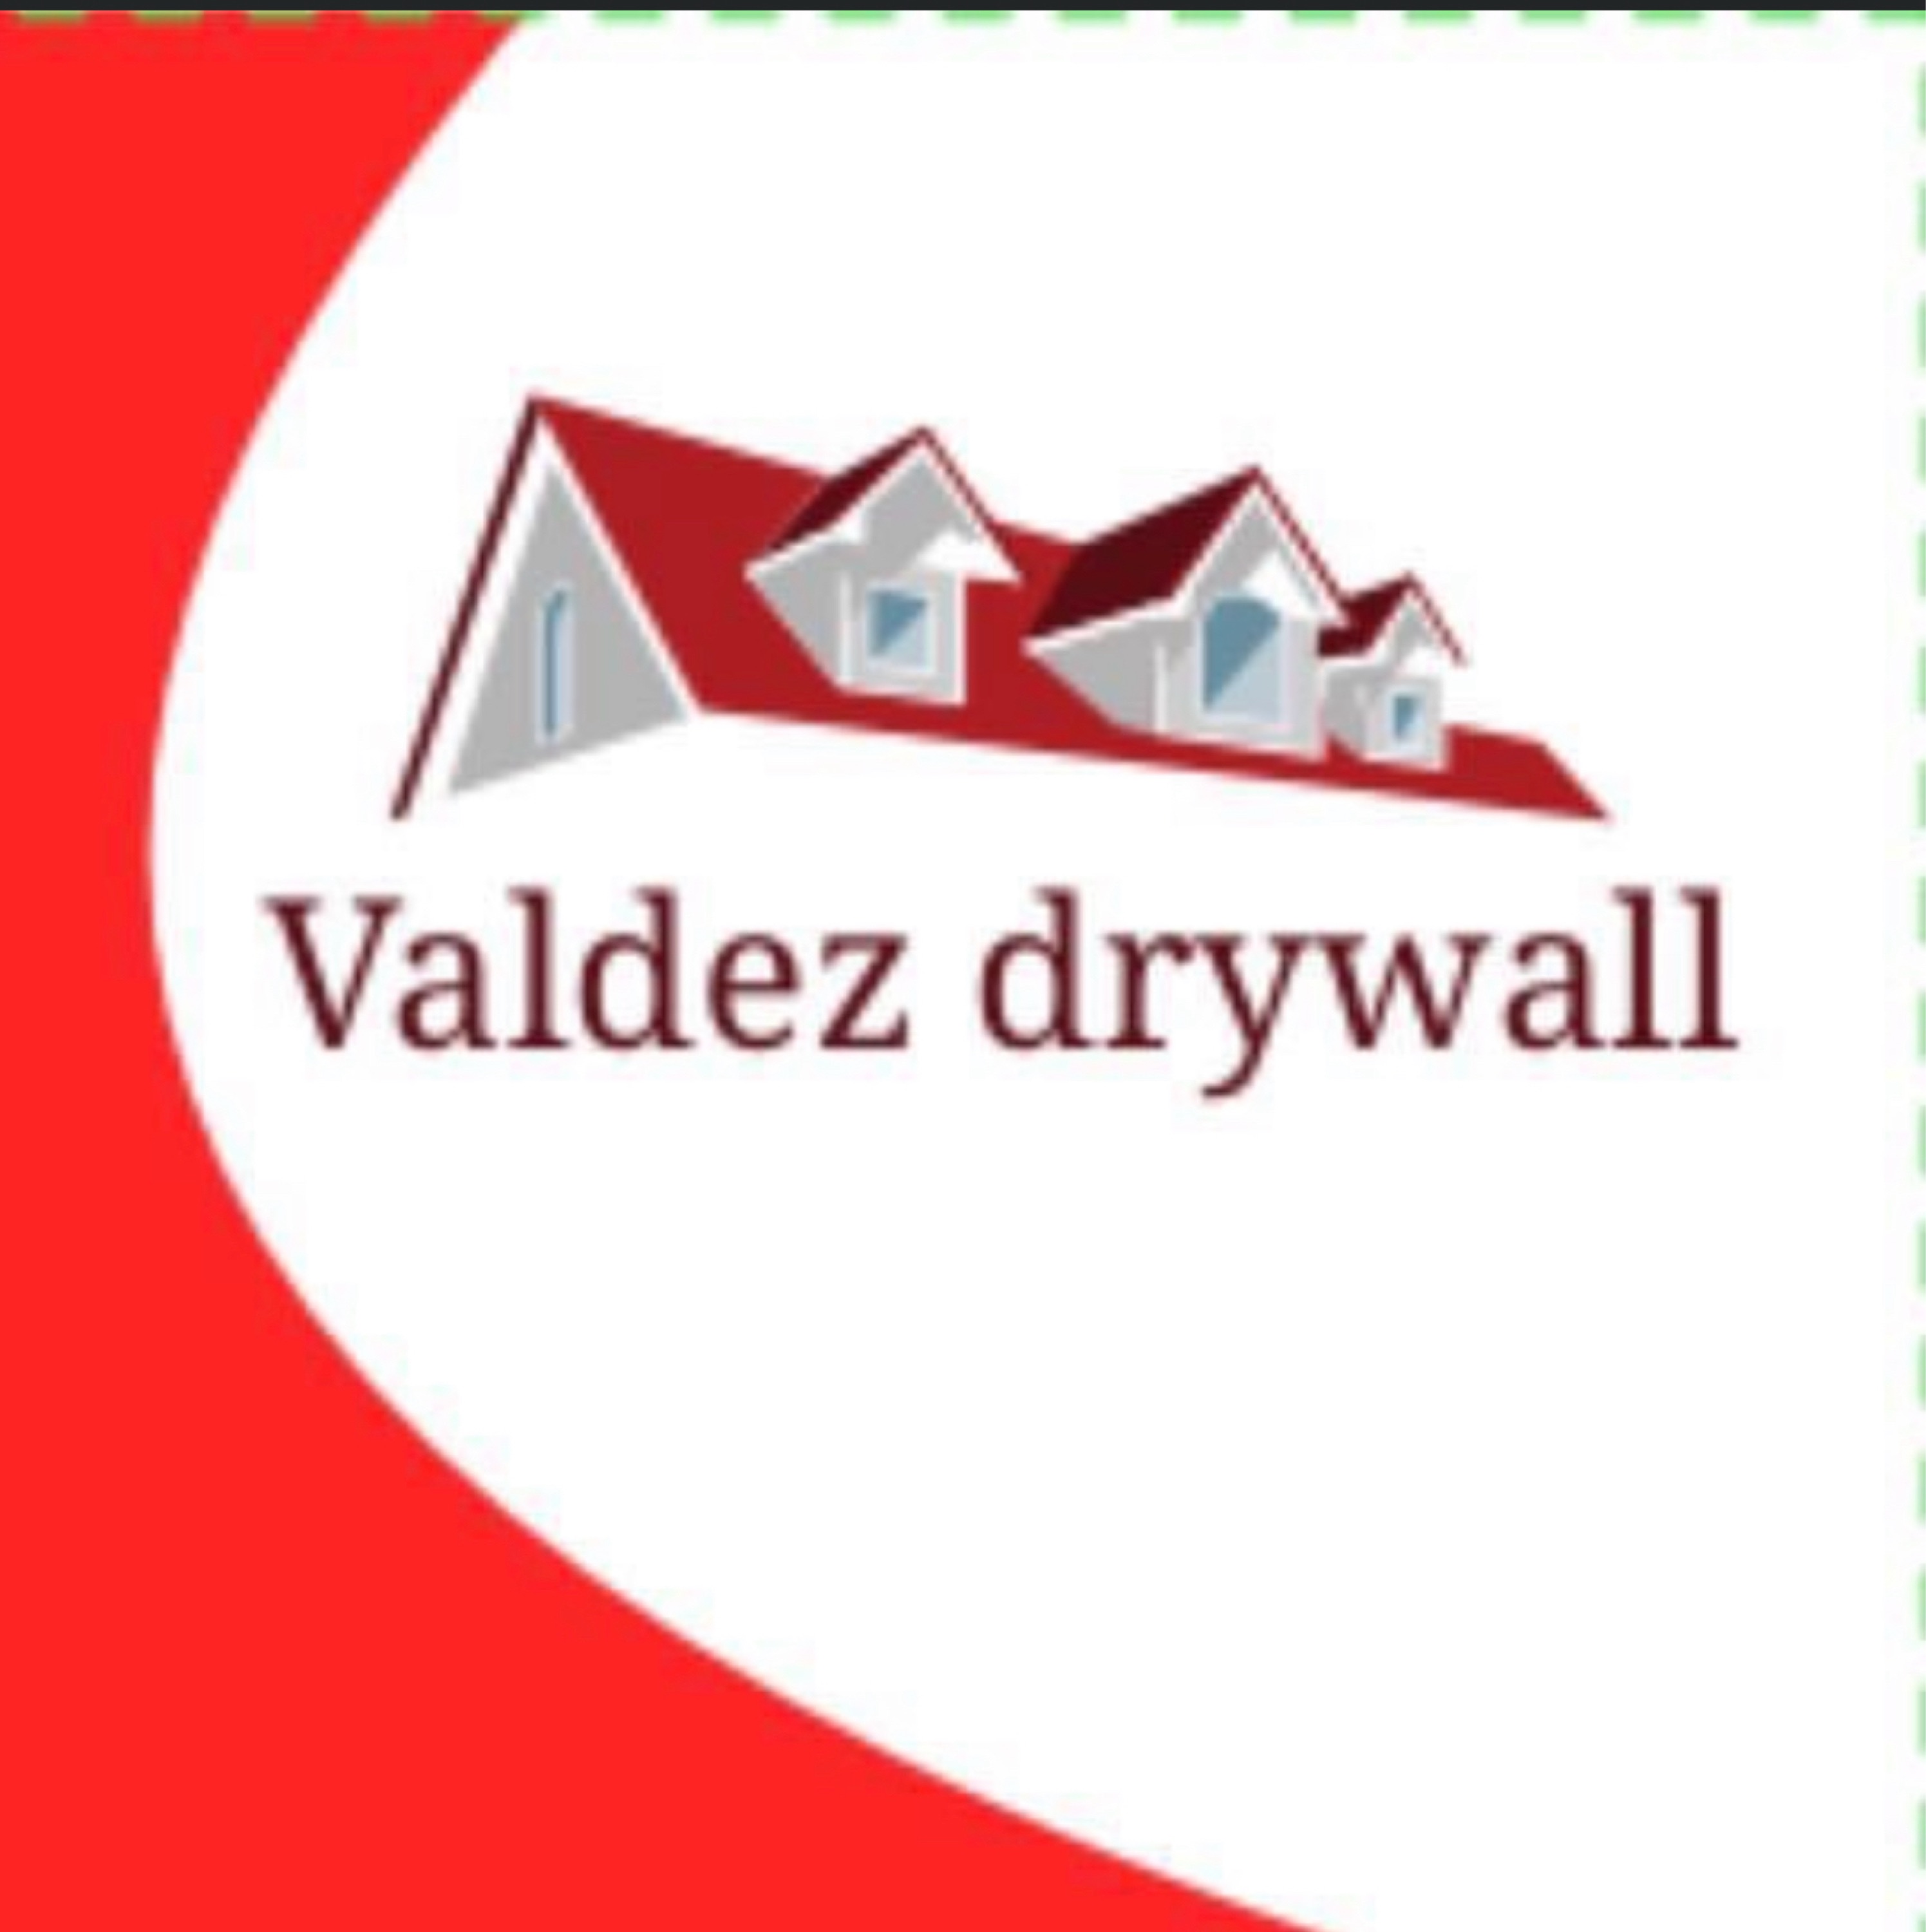 Valdez drywall  Logo